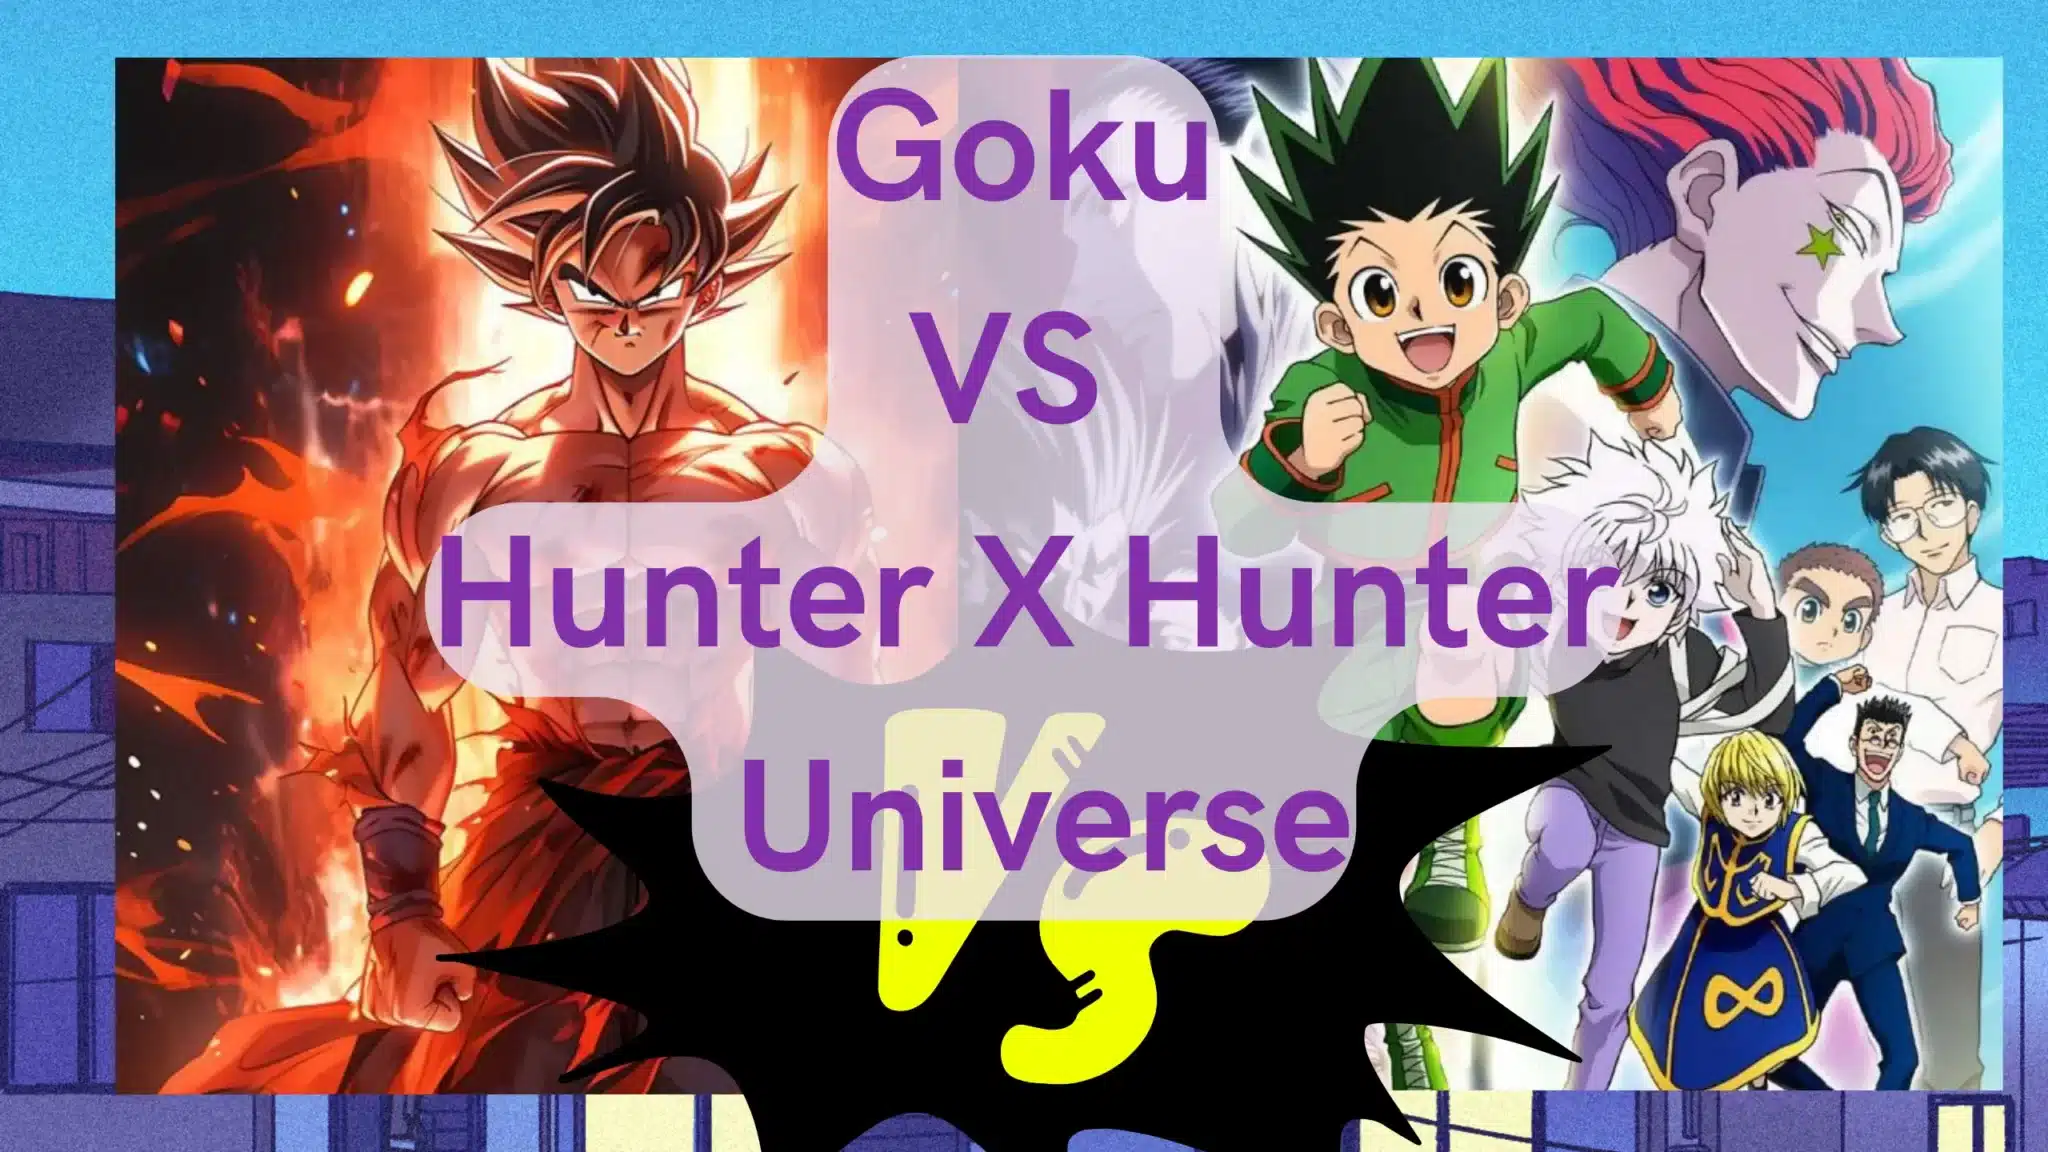 Goku vs hunter x hunter universe